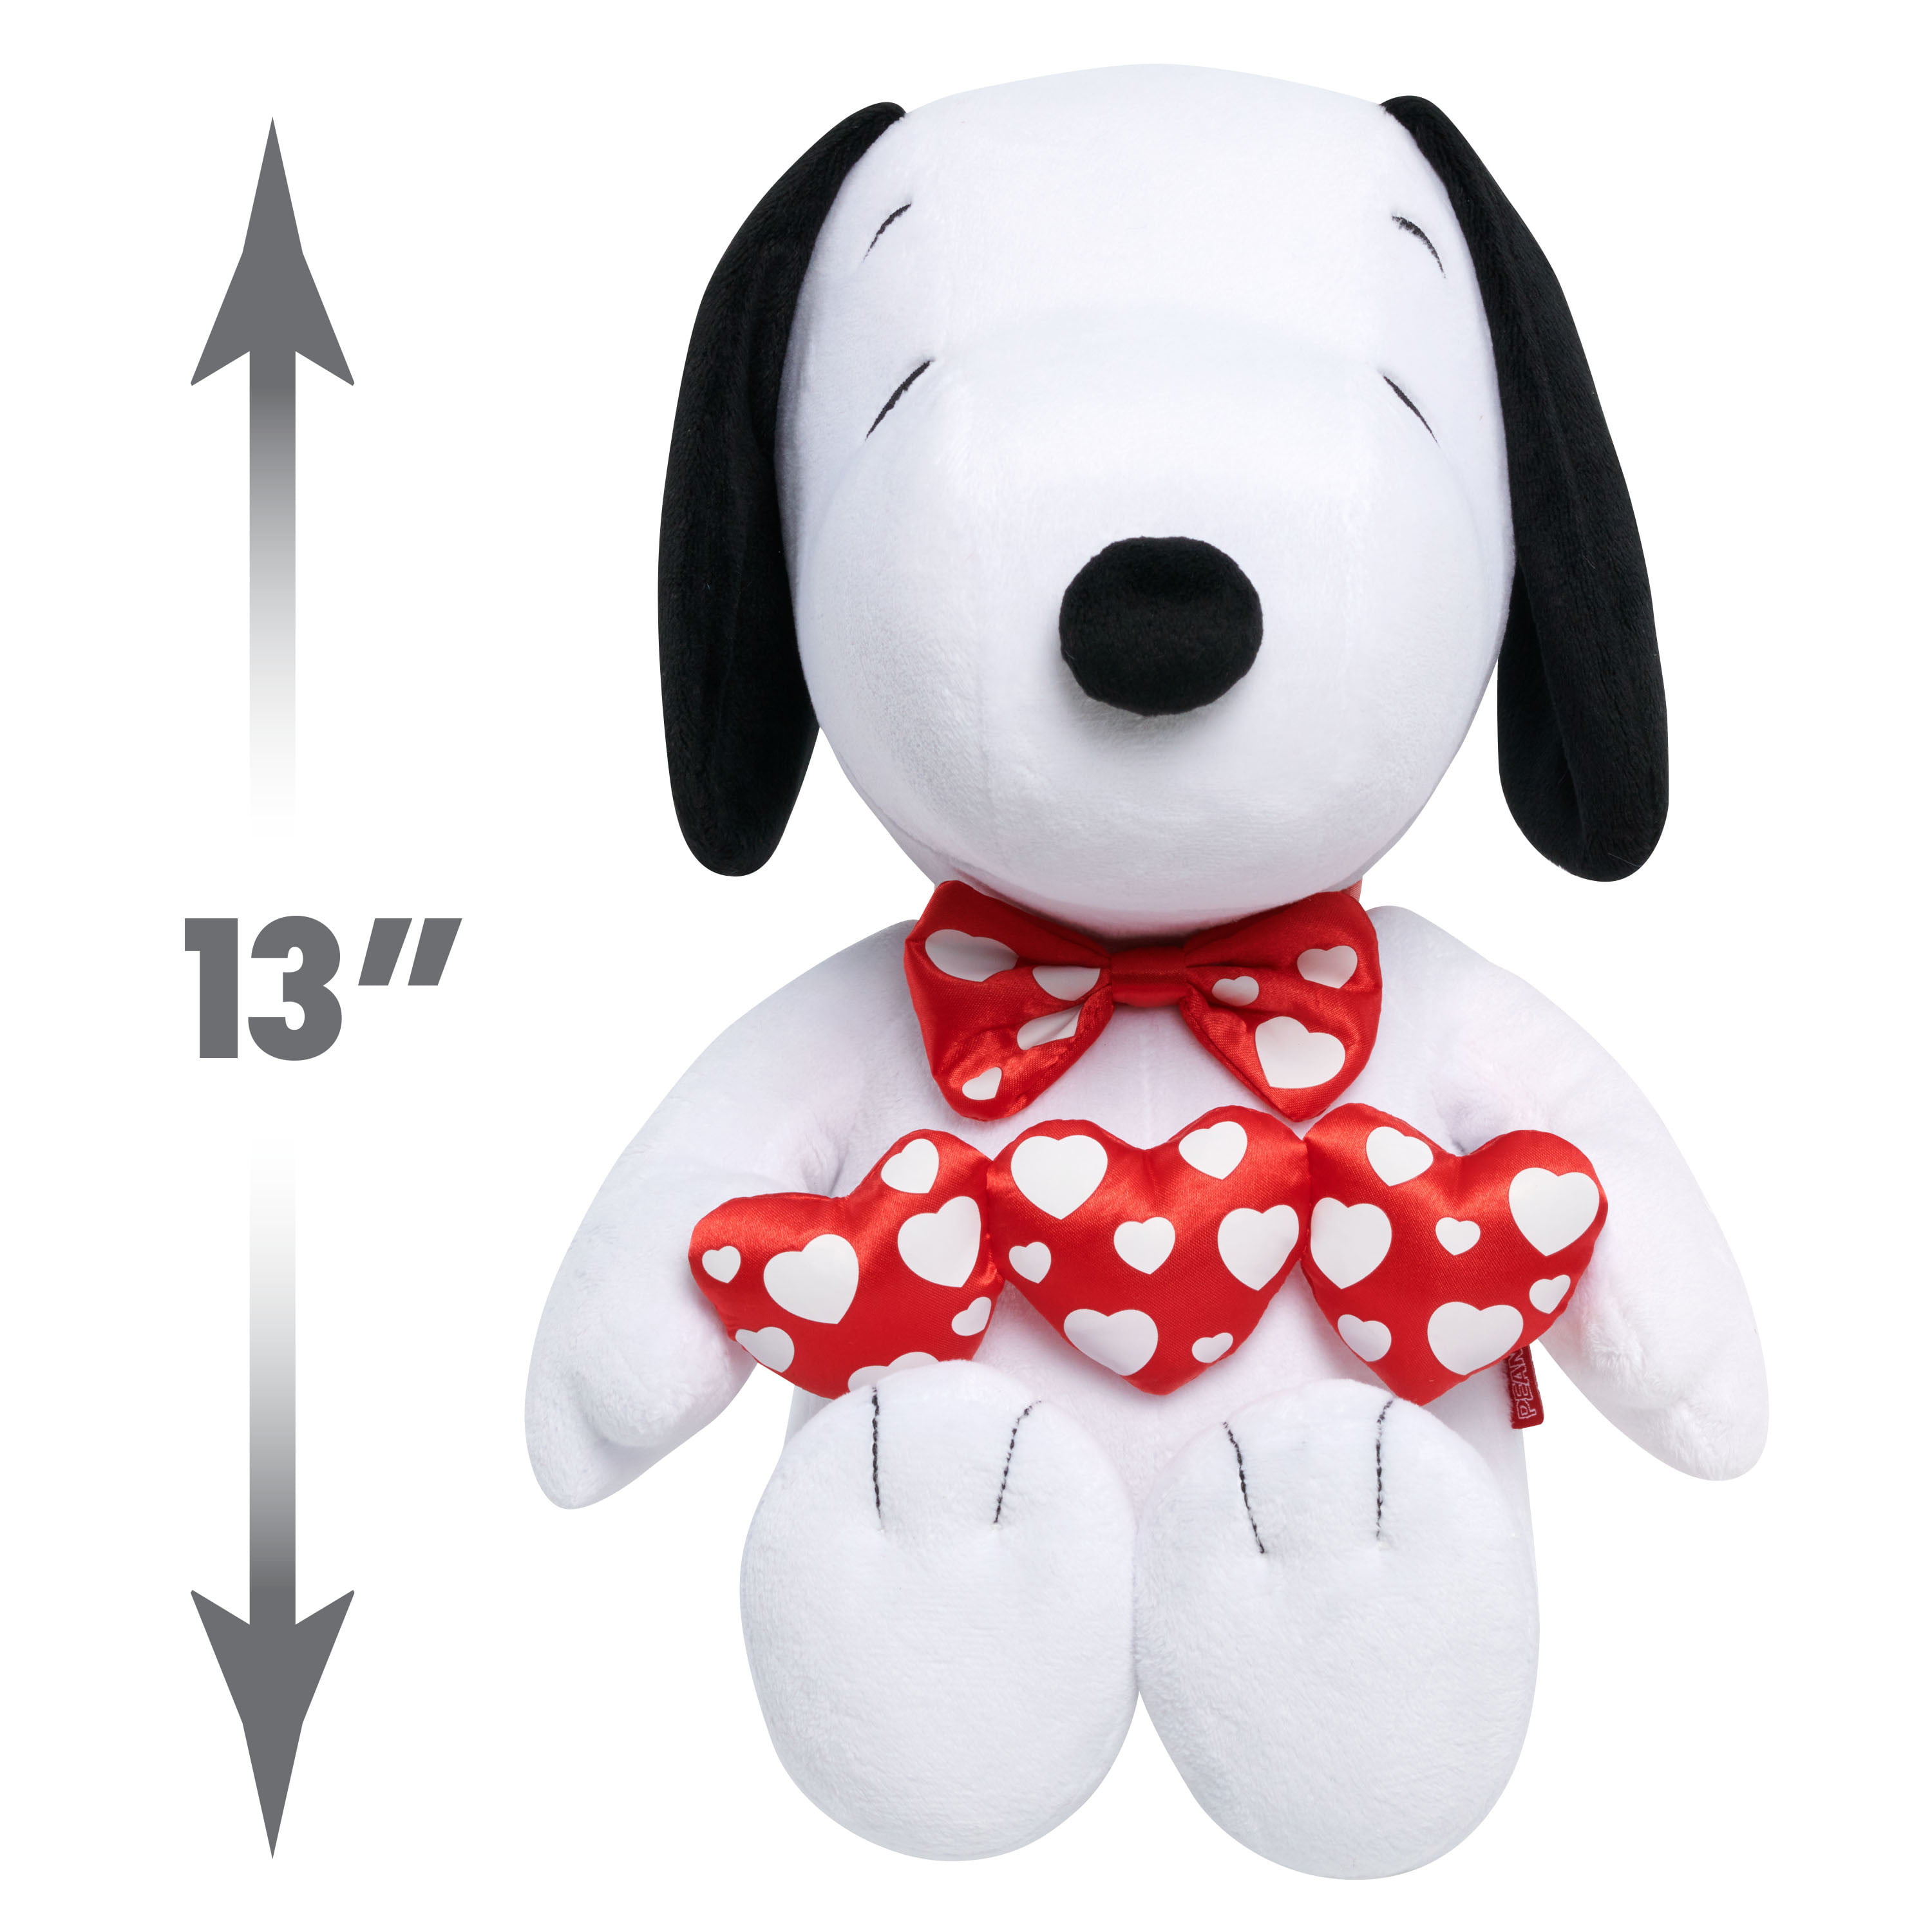 LotFancy Teddy Bear Stuffed Animal, 6 Pack 10 in Bulk Bear Plush Toy Gifts  for Kids Baby,Brown, Beige